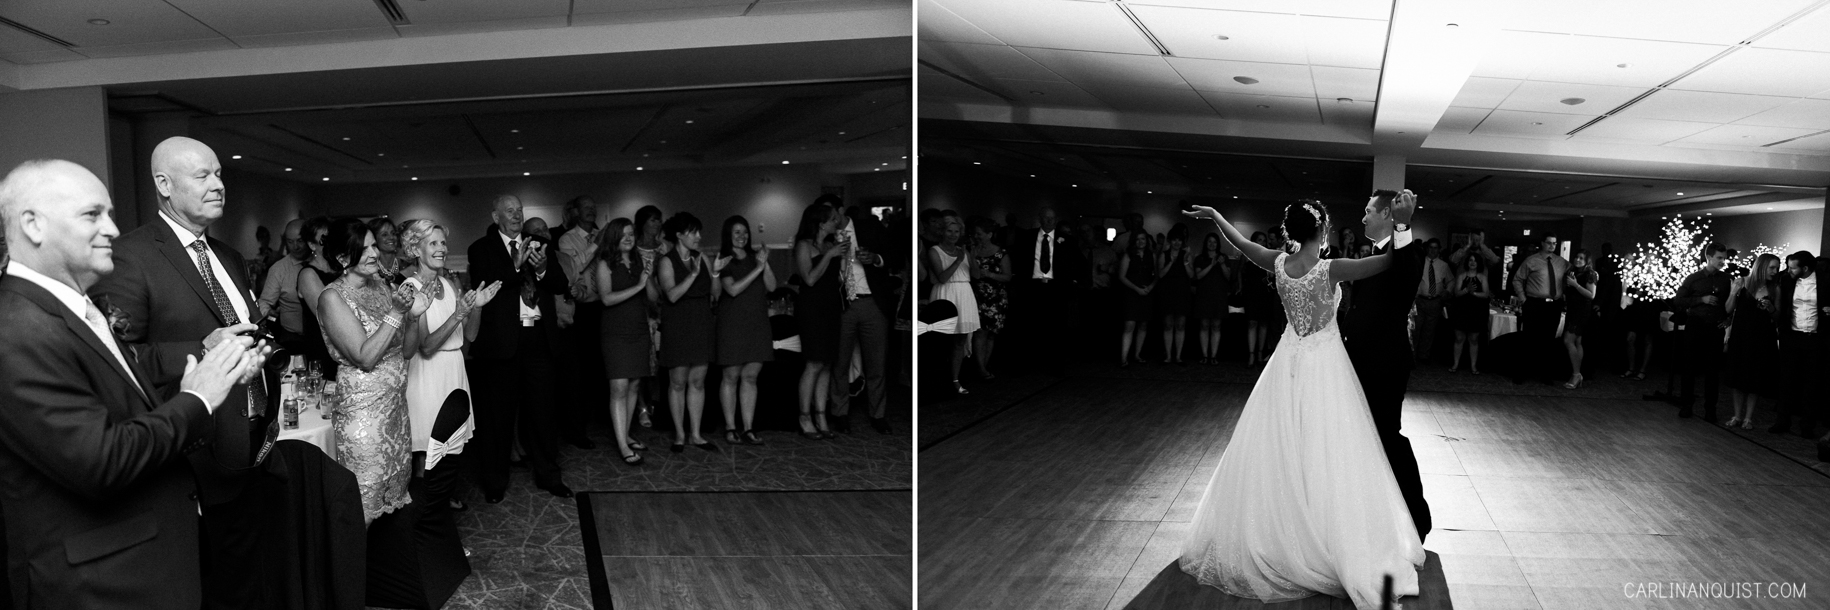 First Dance | Calgary Winter Club Wedding Photographers